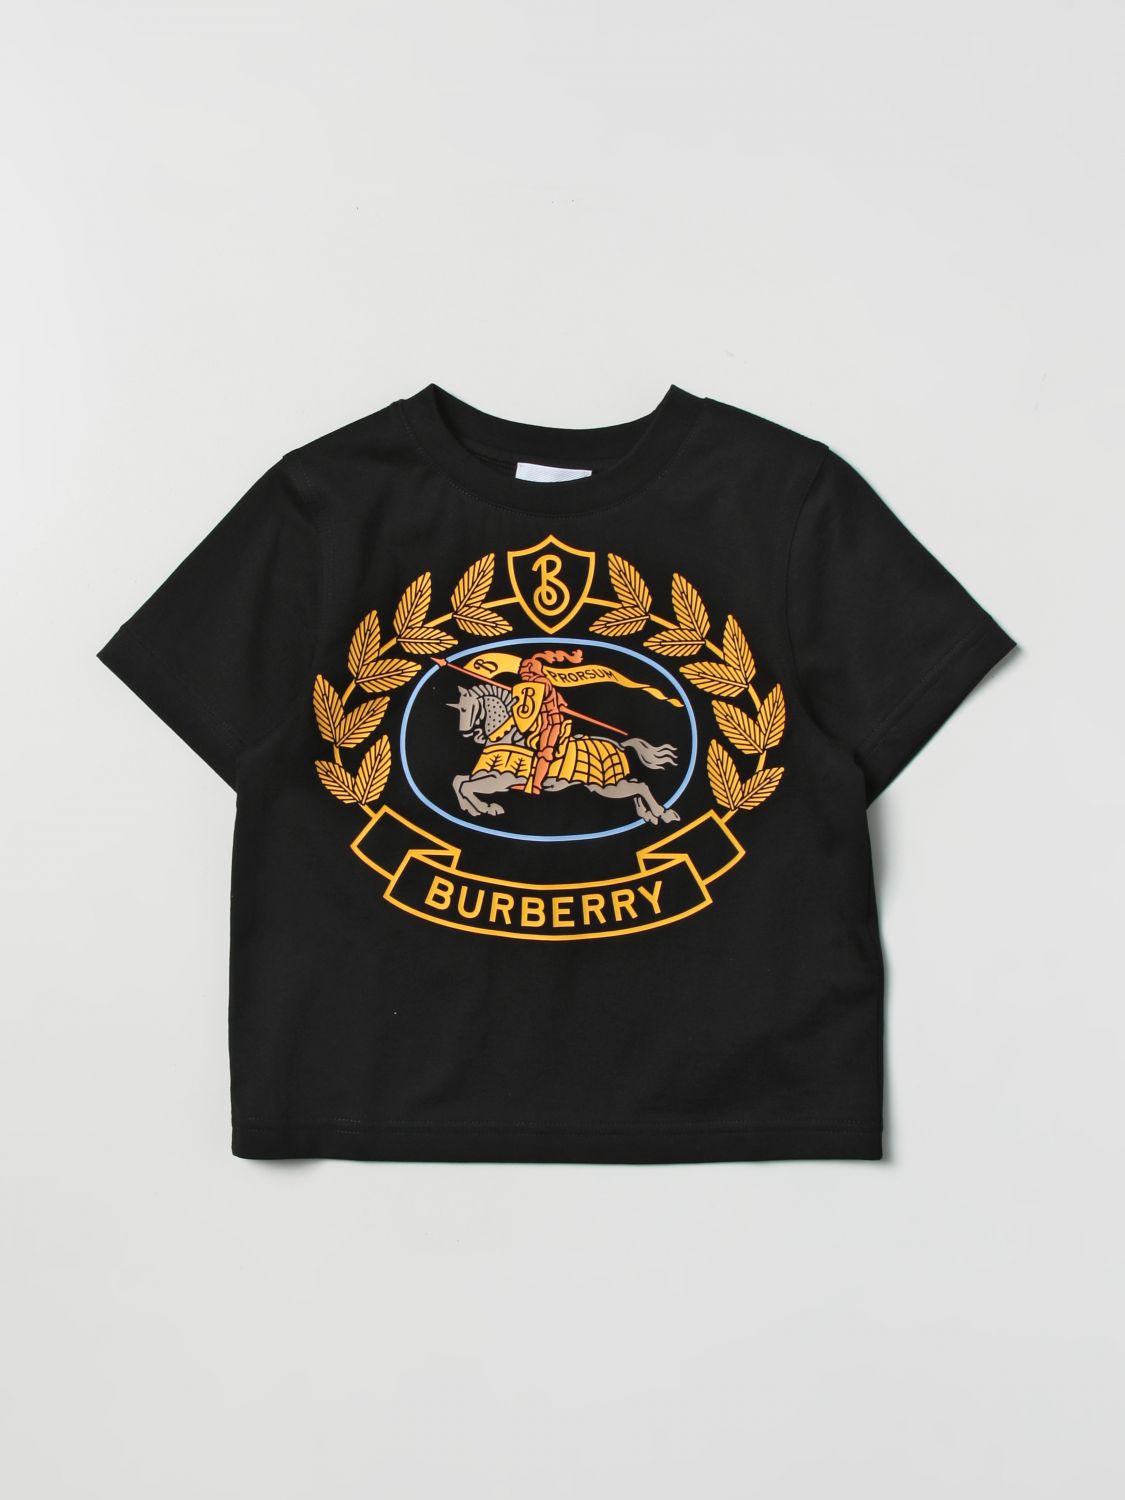 Burberry cotton t-shirt